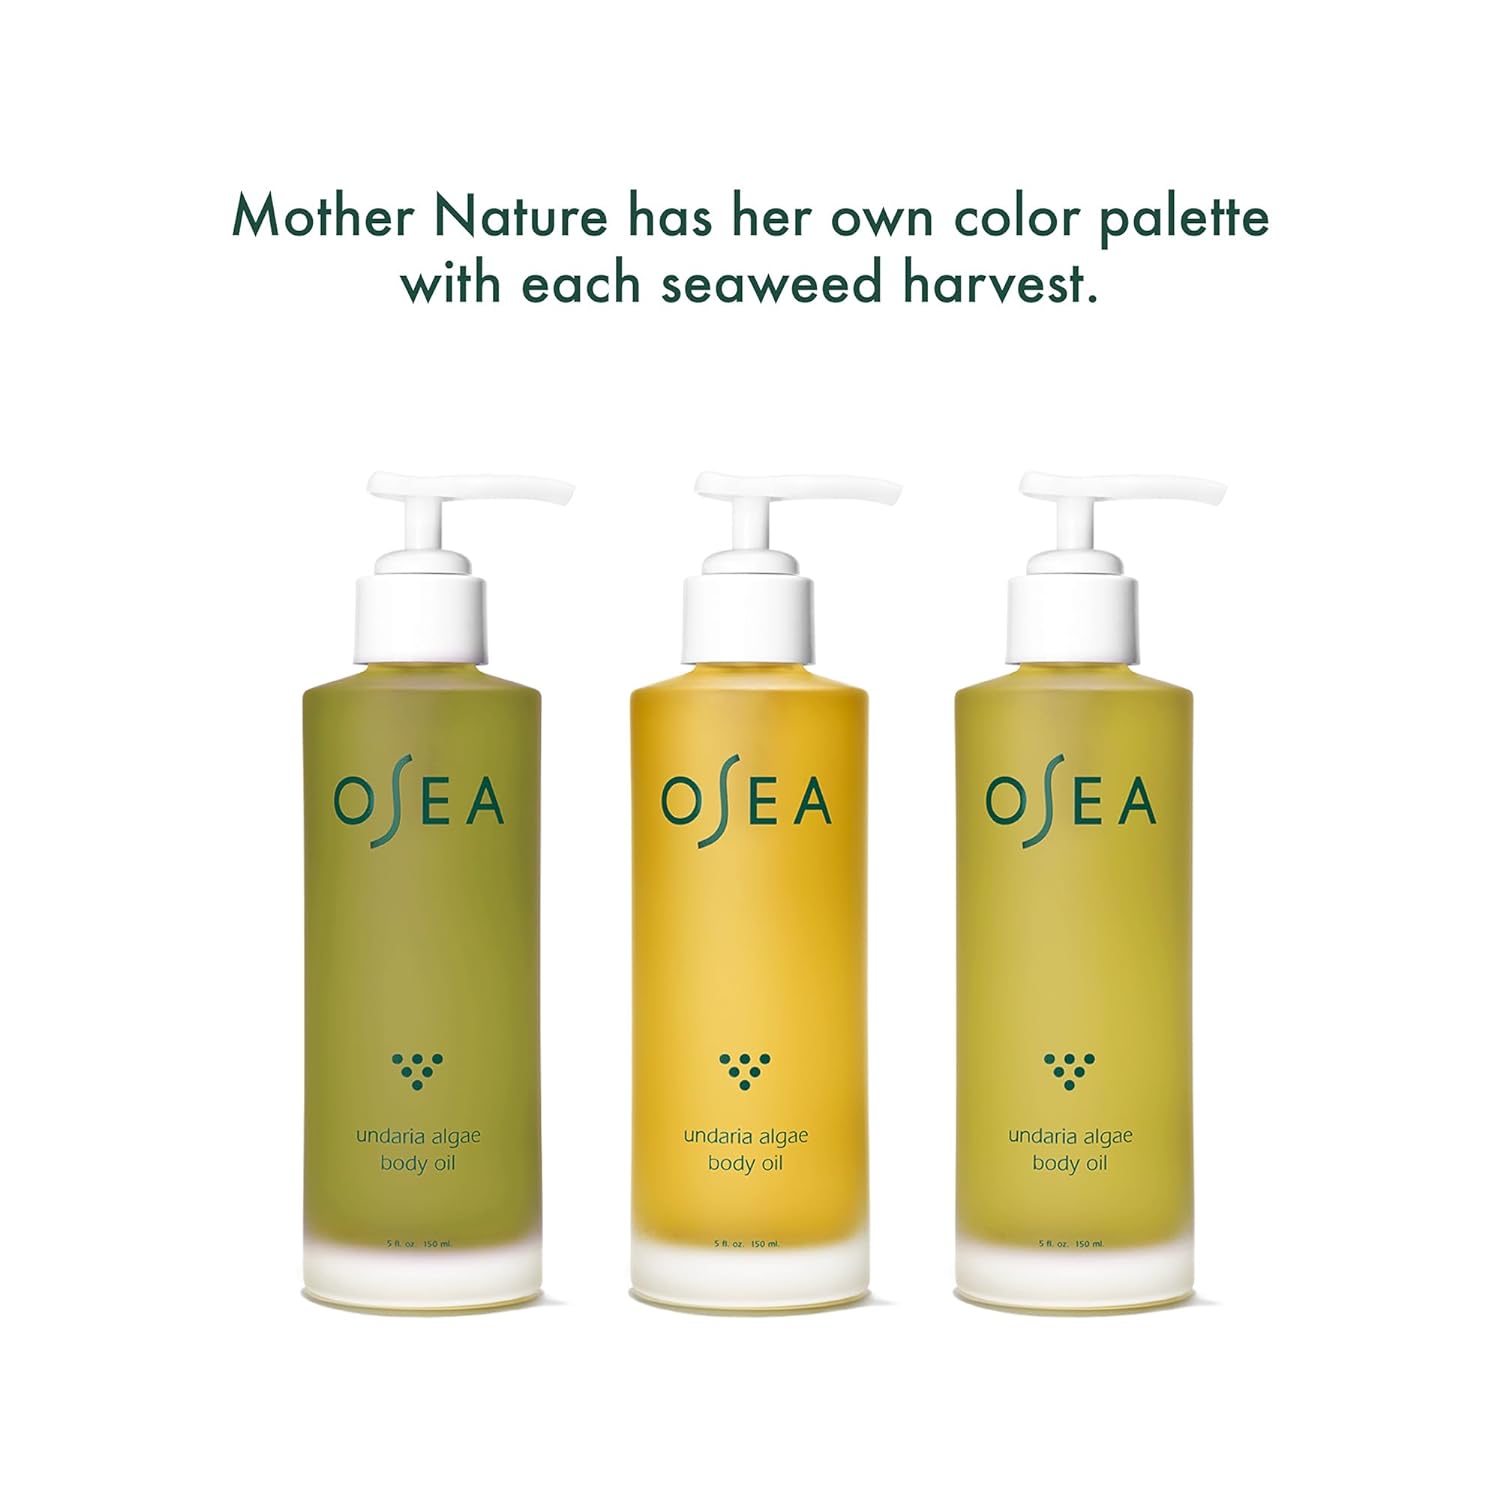 OSEA Undaria Algae Body Oil 5 oz, After Shower Body Oil, Firming, Non-Greasy & Fast Absorbing Skin Care, Vegan & Cruelty Free Seaweed Body Moisturizer : Body Oils : Beauty & Personal Care